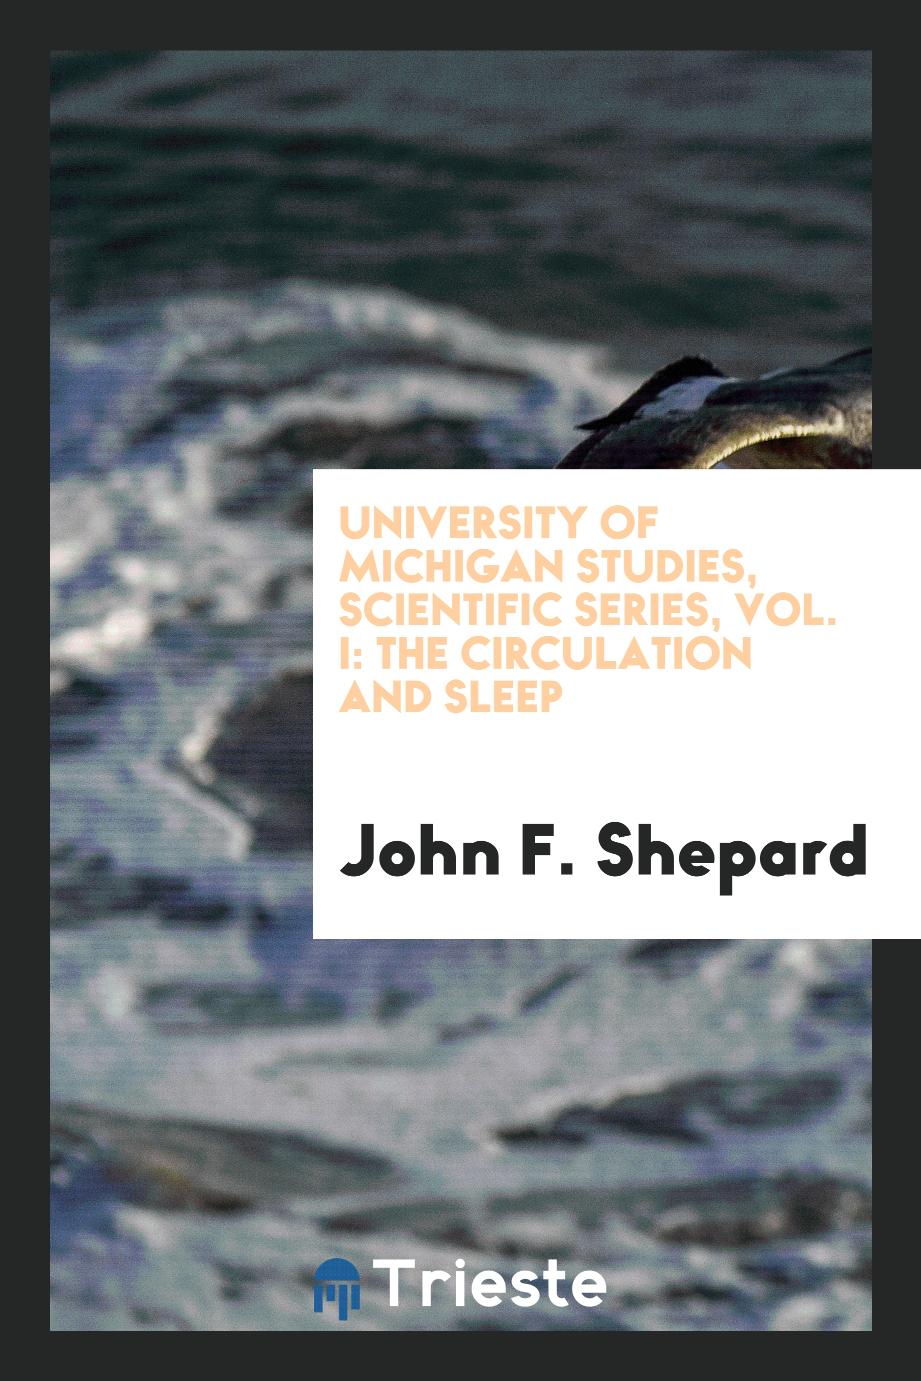 University of Michigan Studies, Scientific Series, Vol. I: The Circulation and Sleep